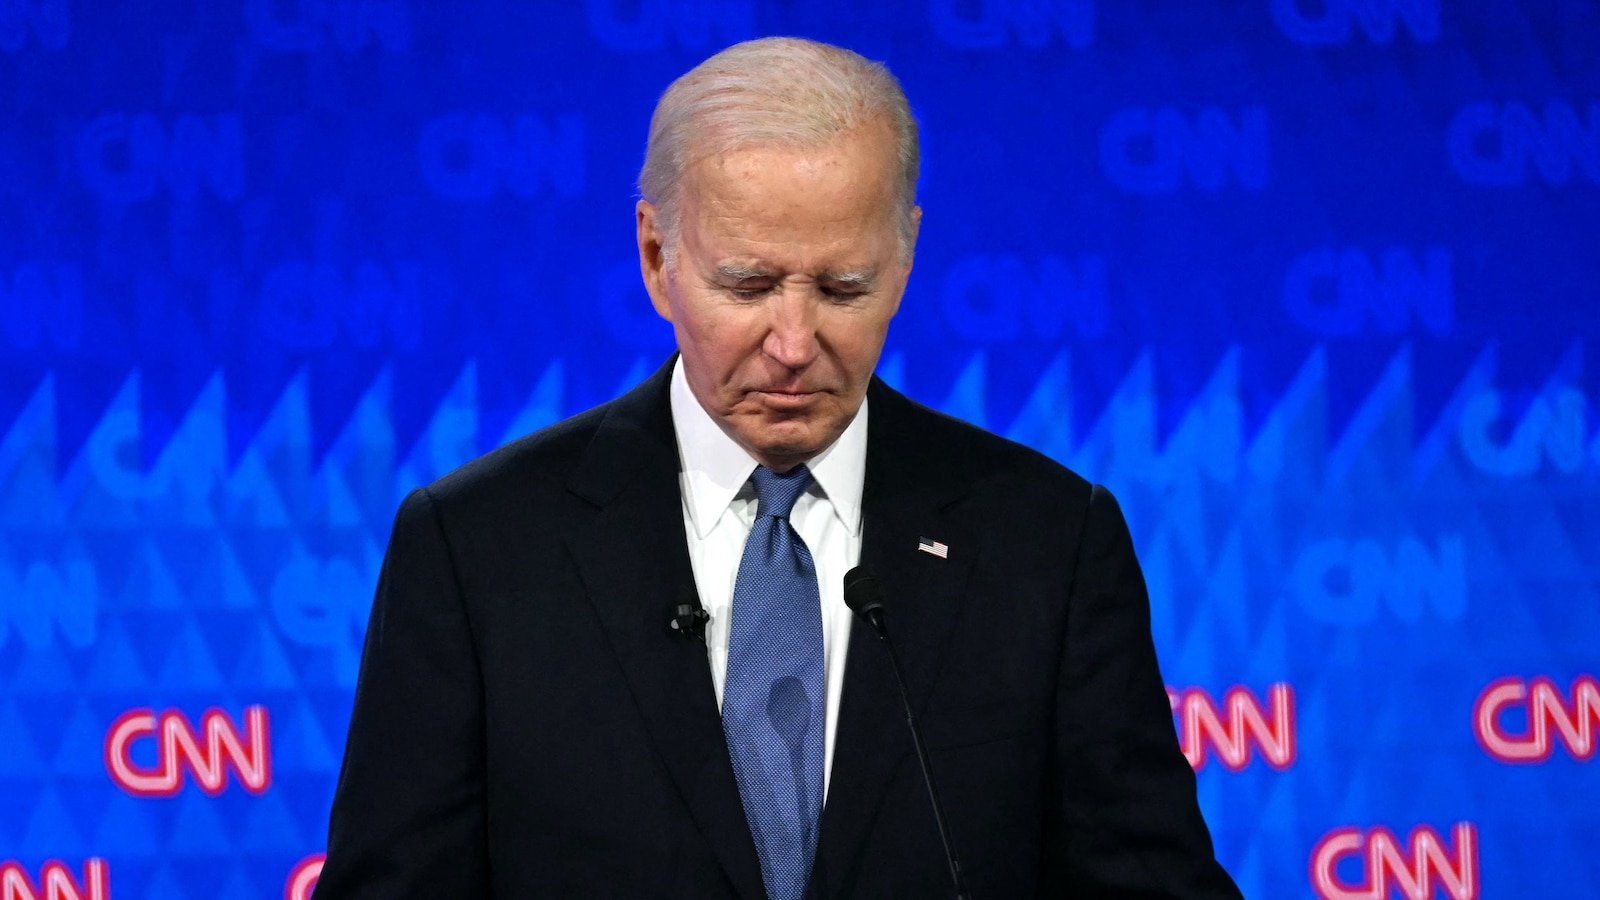 Biden blames international travel for poor debate performance